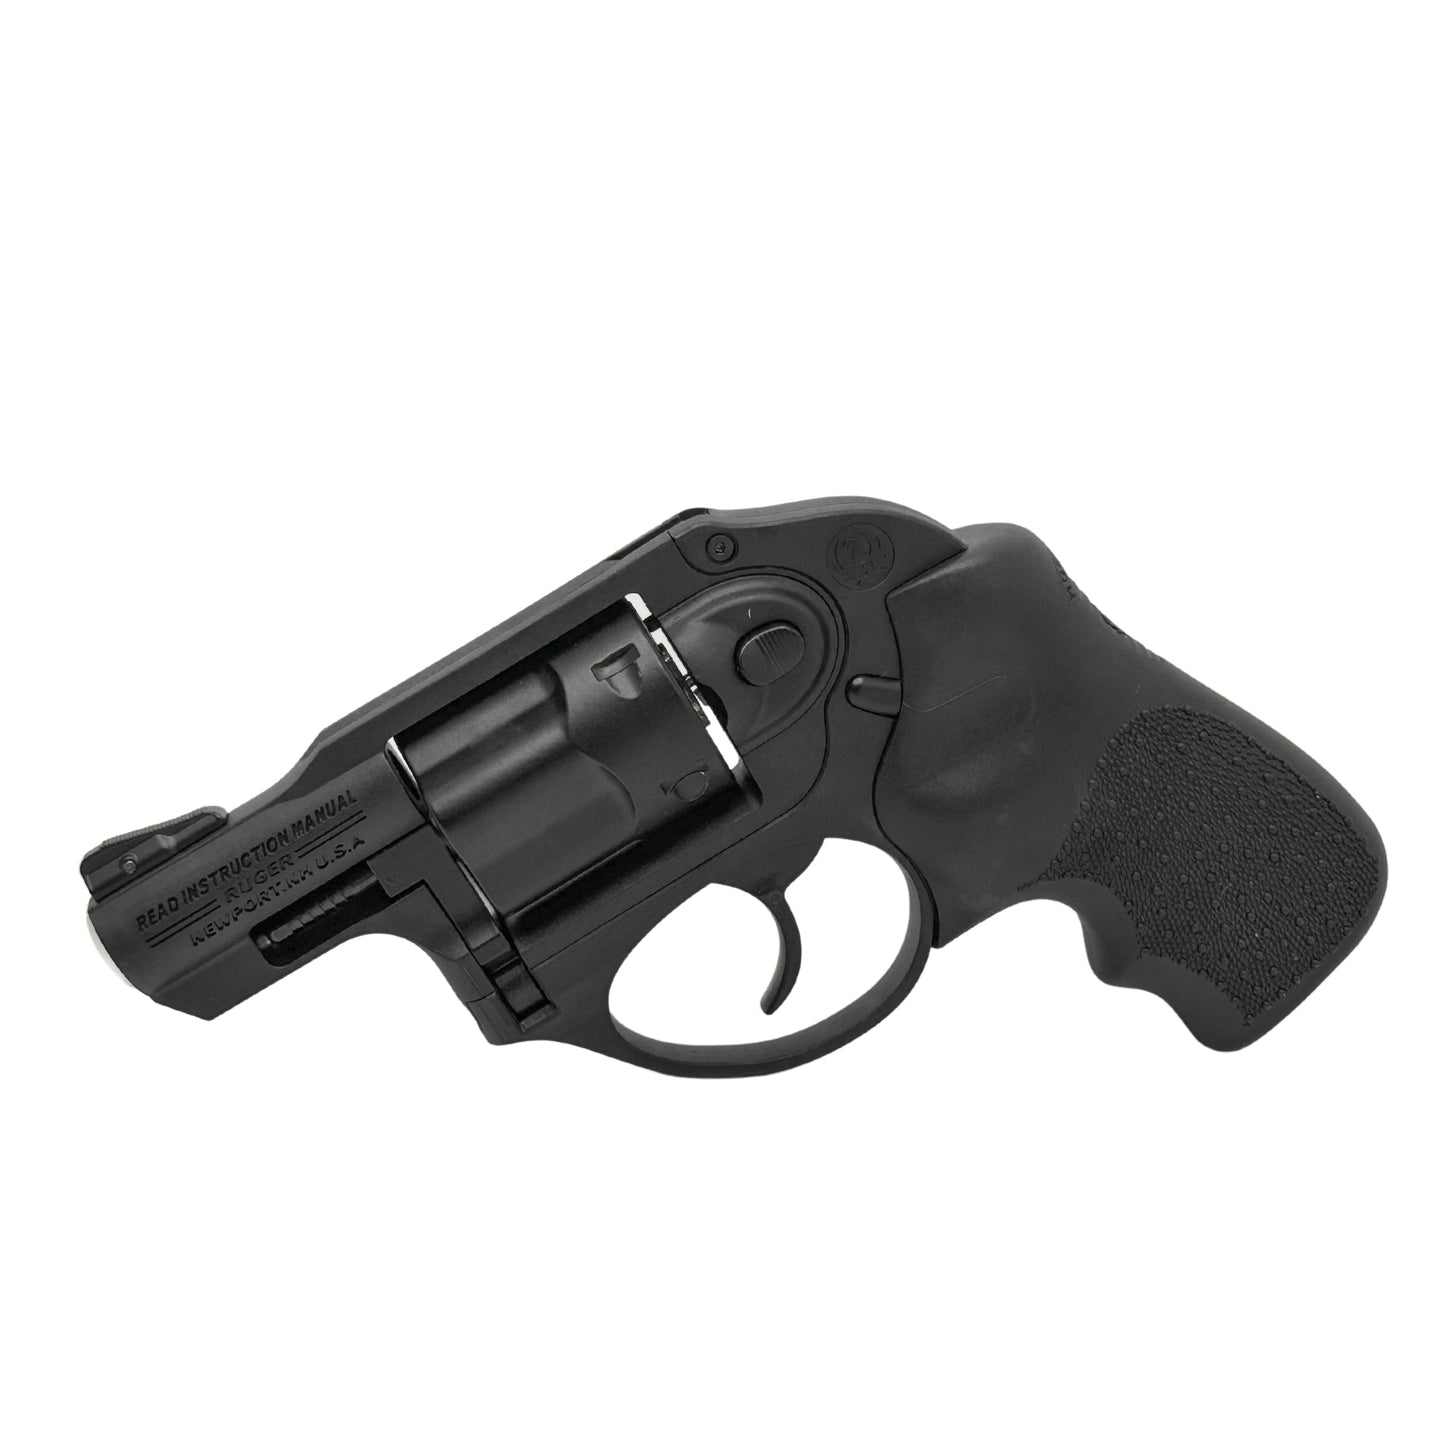 Ruger LCR 38 SPL+P Revolver - Plastic Dart Gun